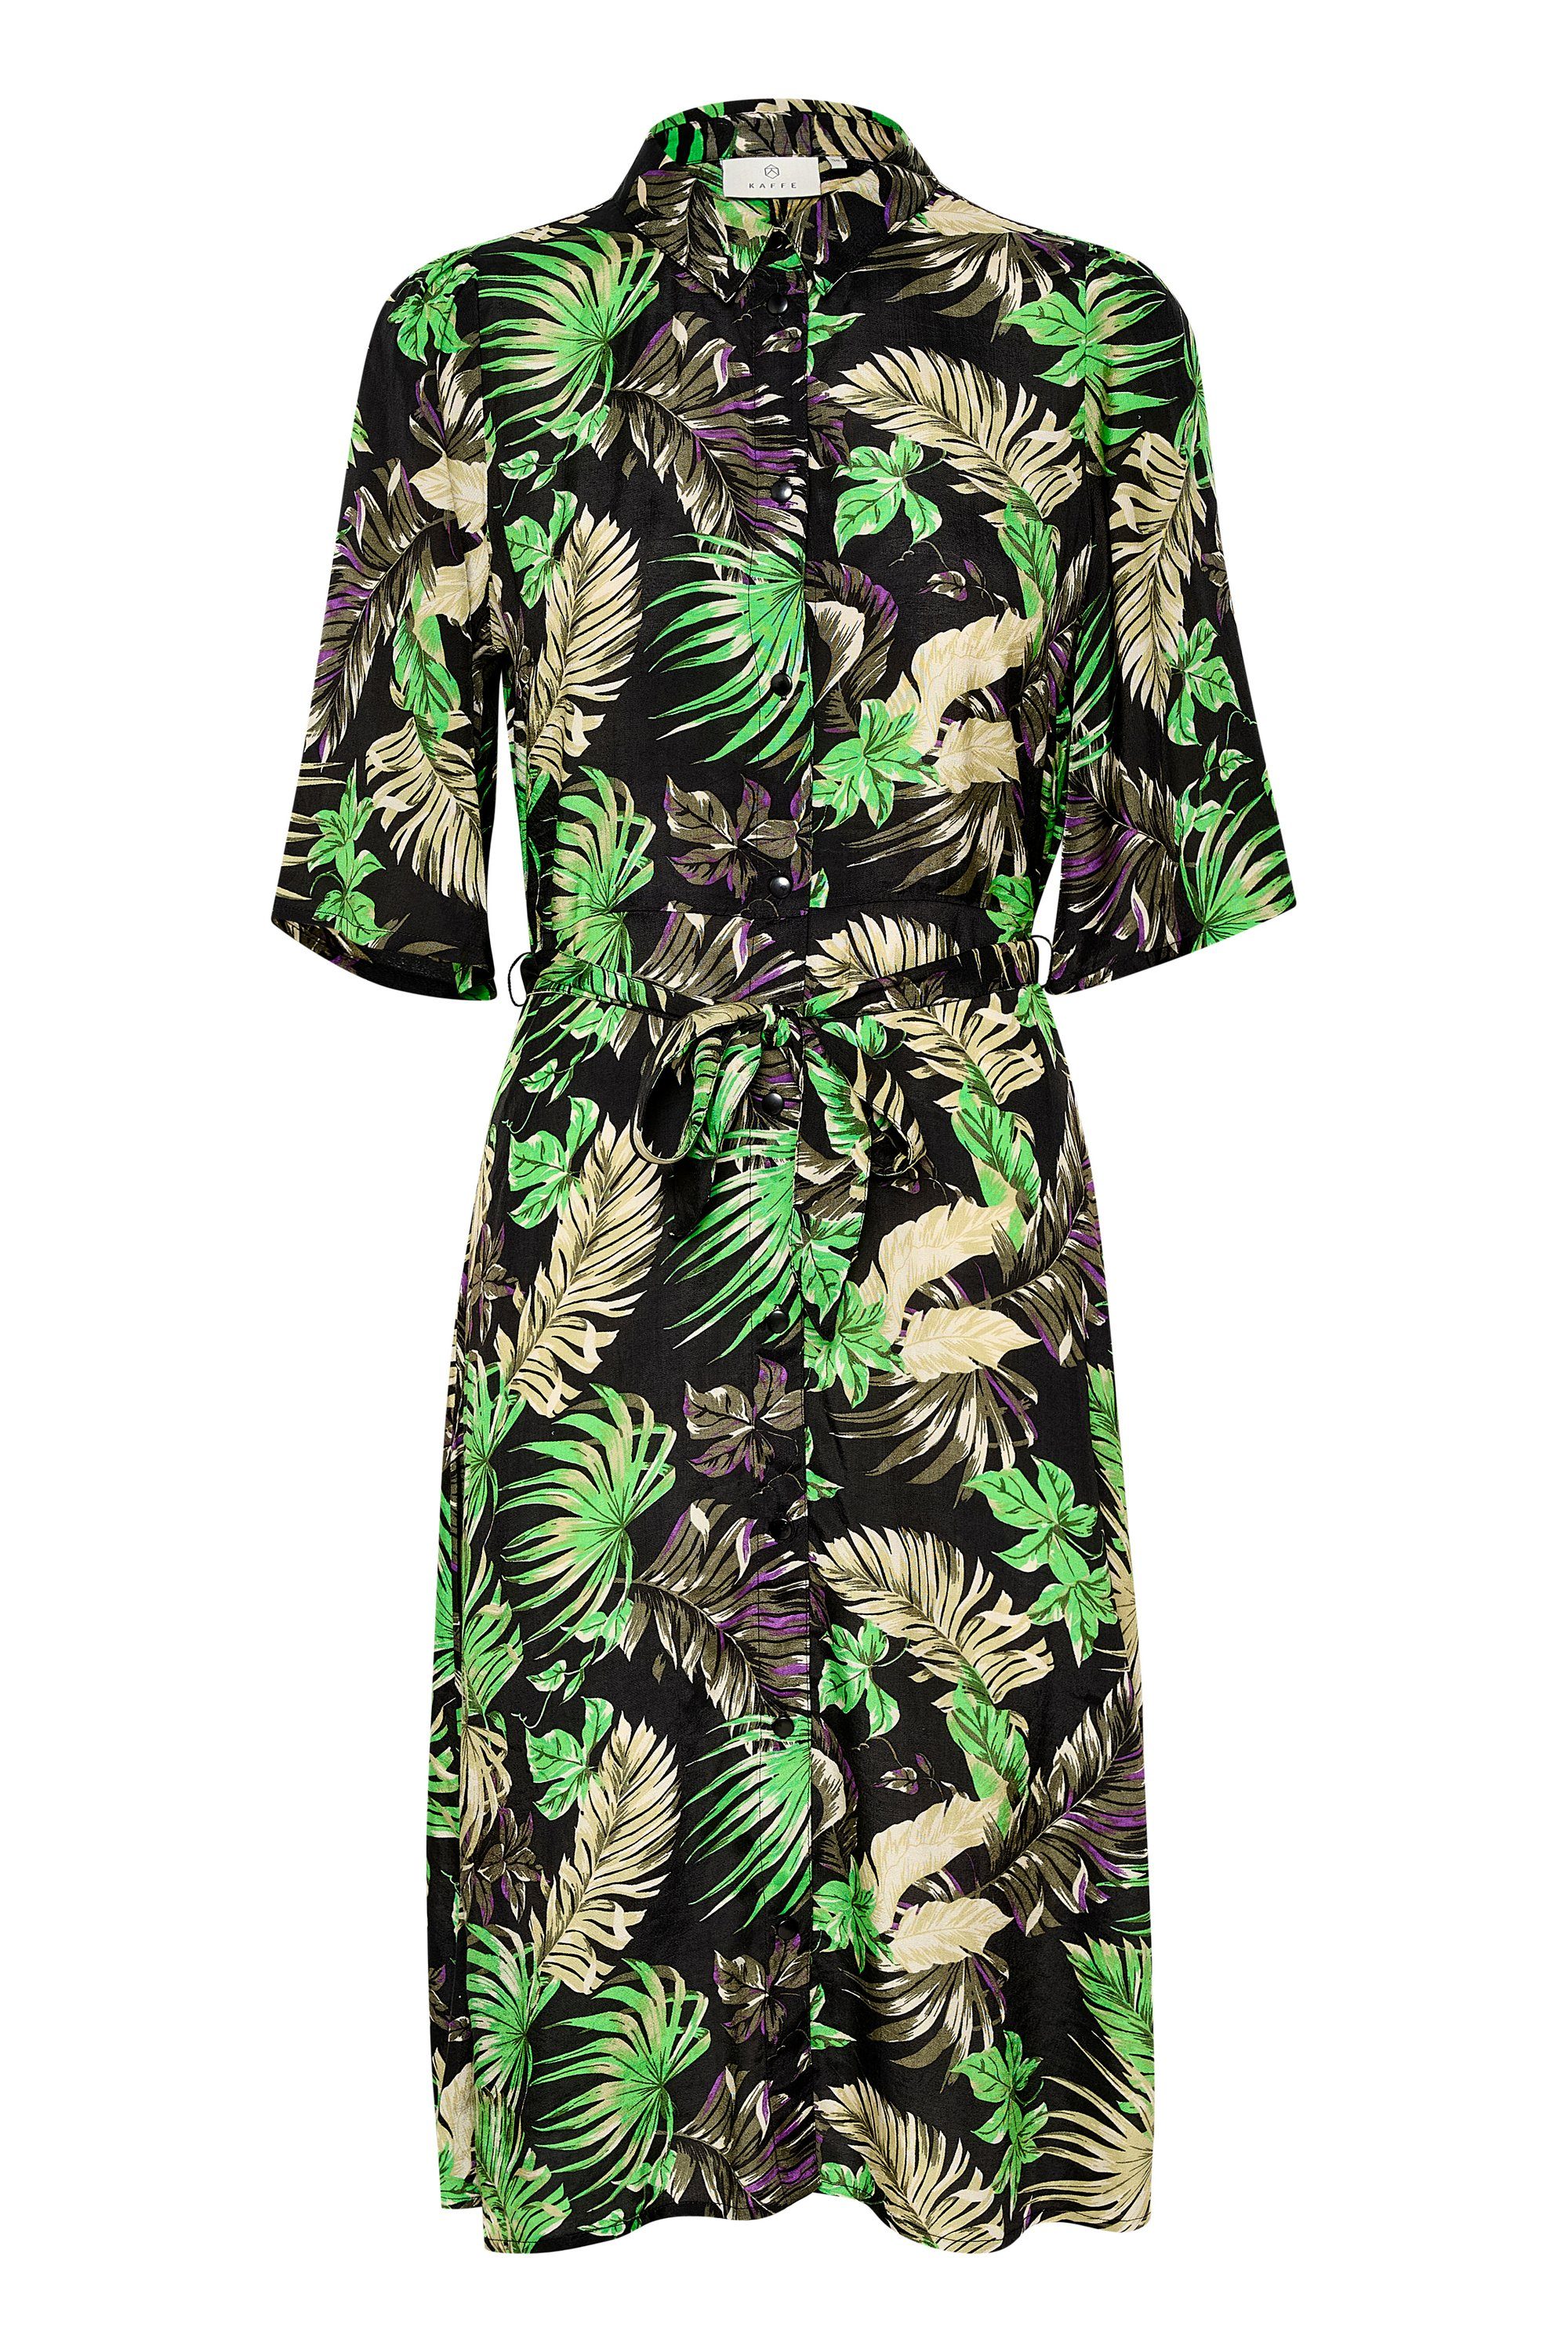 Green/Black/Violet Jerseykleid KAsafir Kleid KAFFE Palm Print